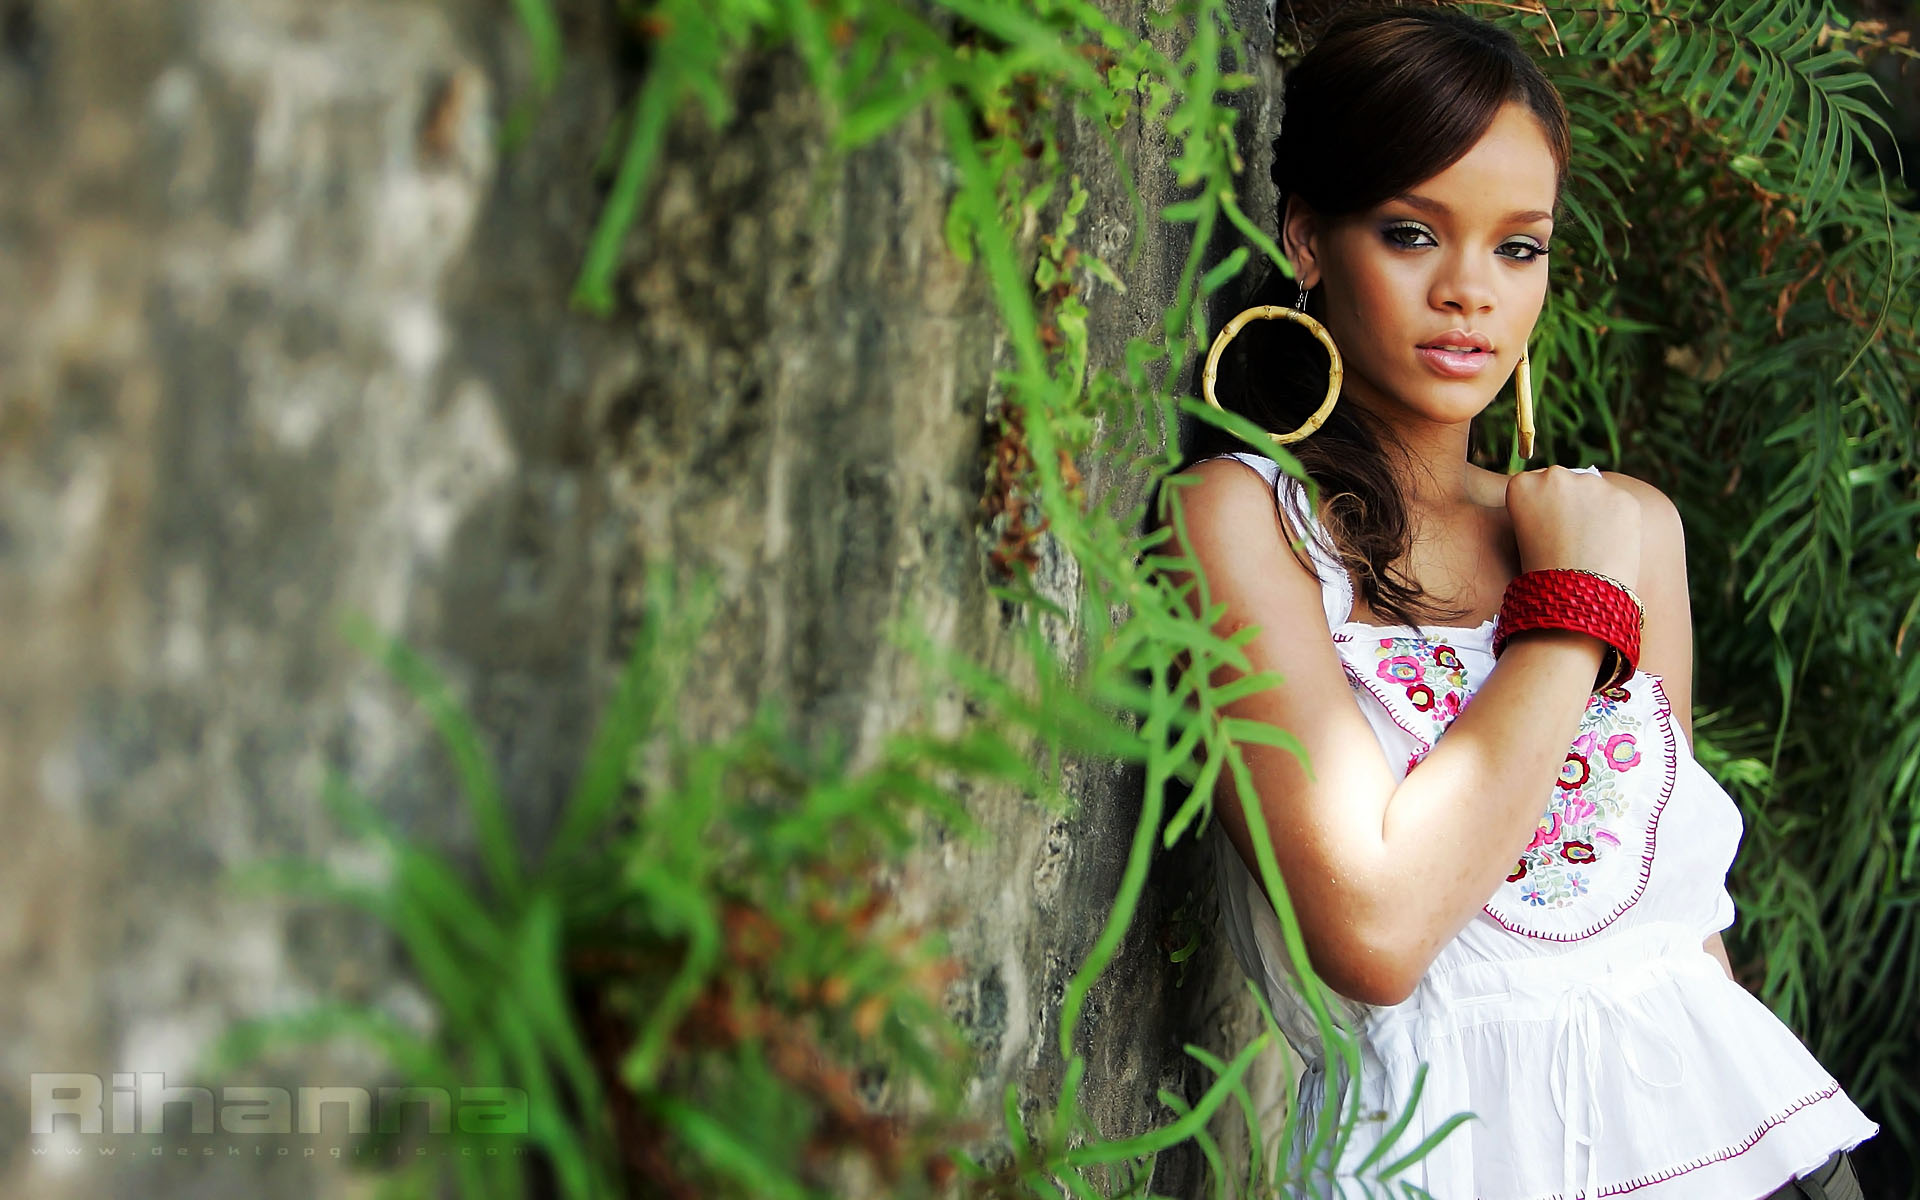 Rihanna Wallpaper HD Celebrity Bwalles Gallery